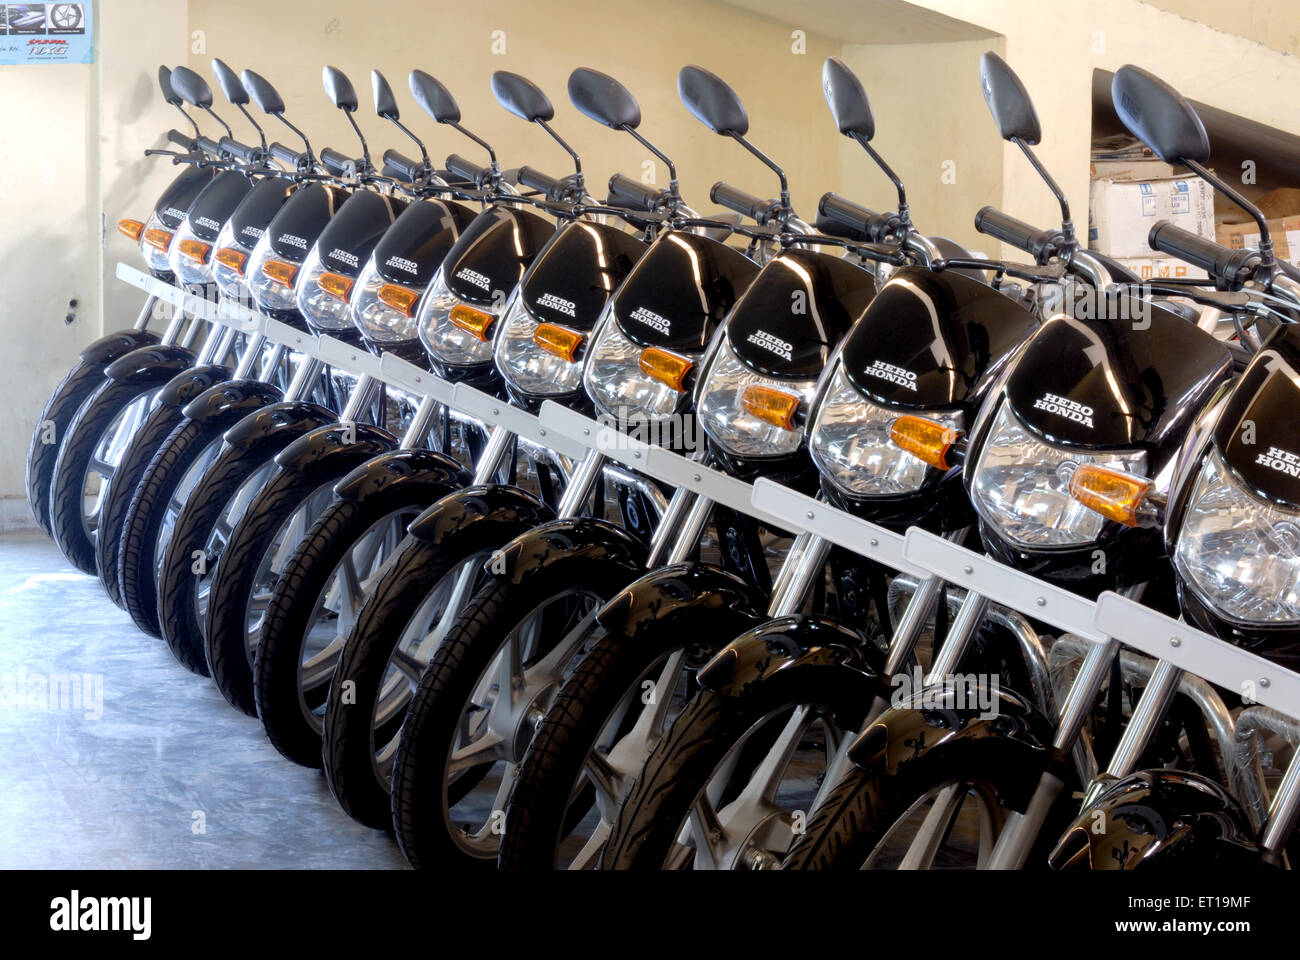 Bike parked in showroom Stock Photo